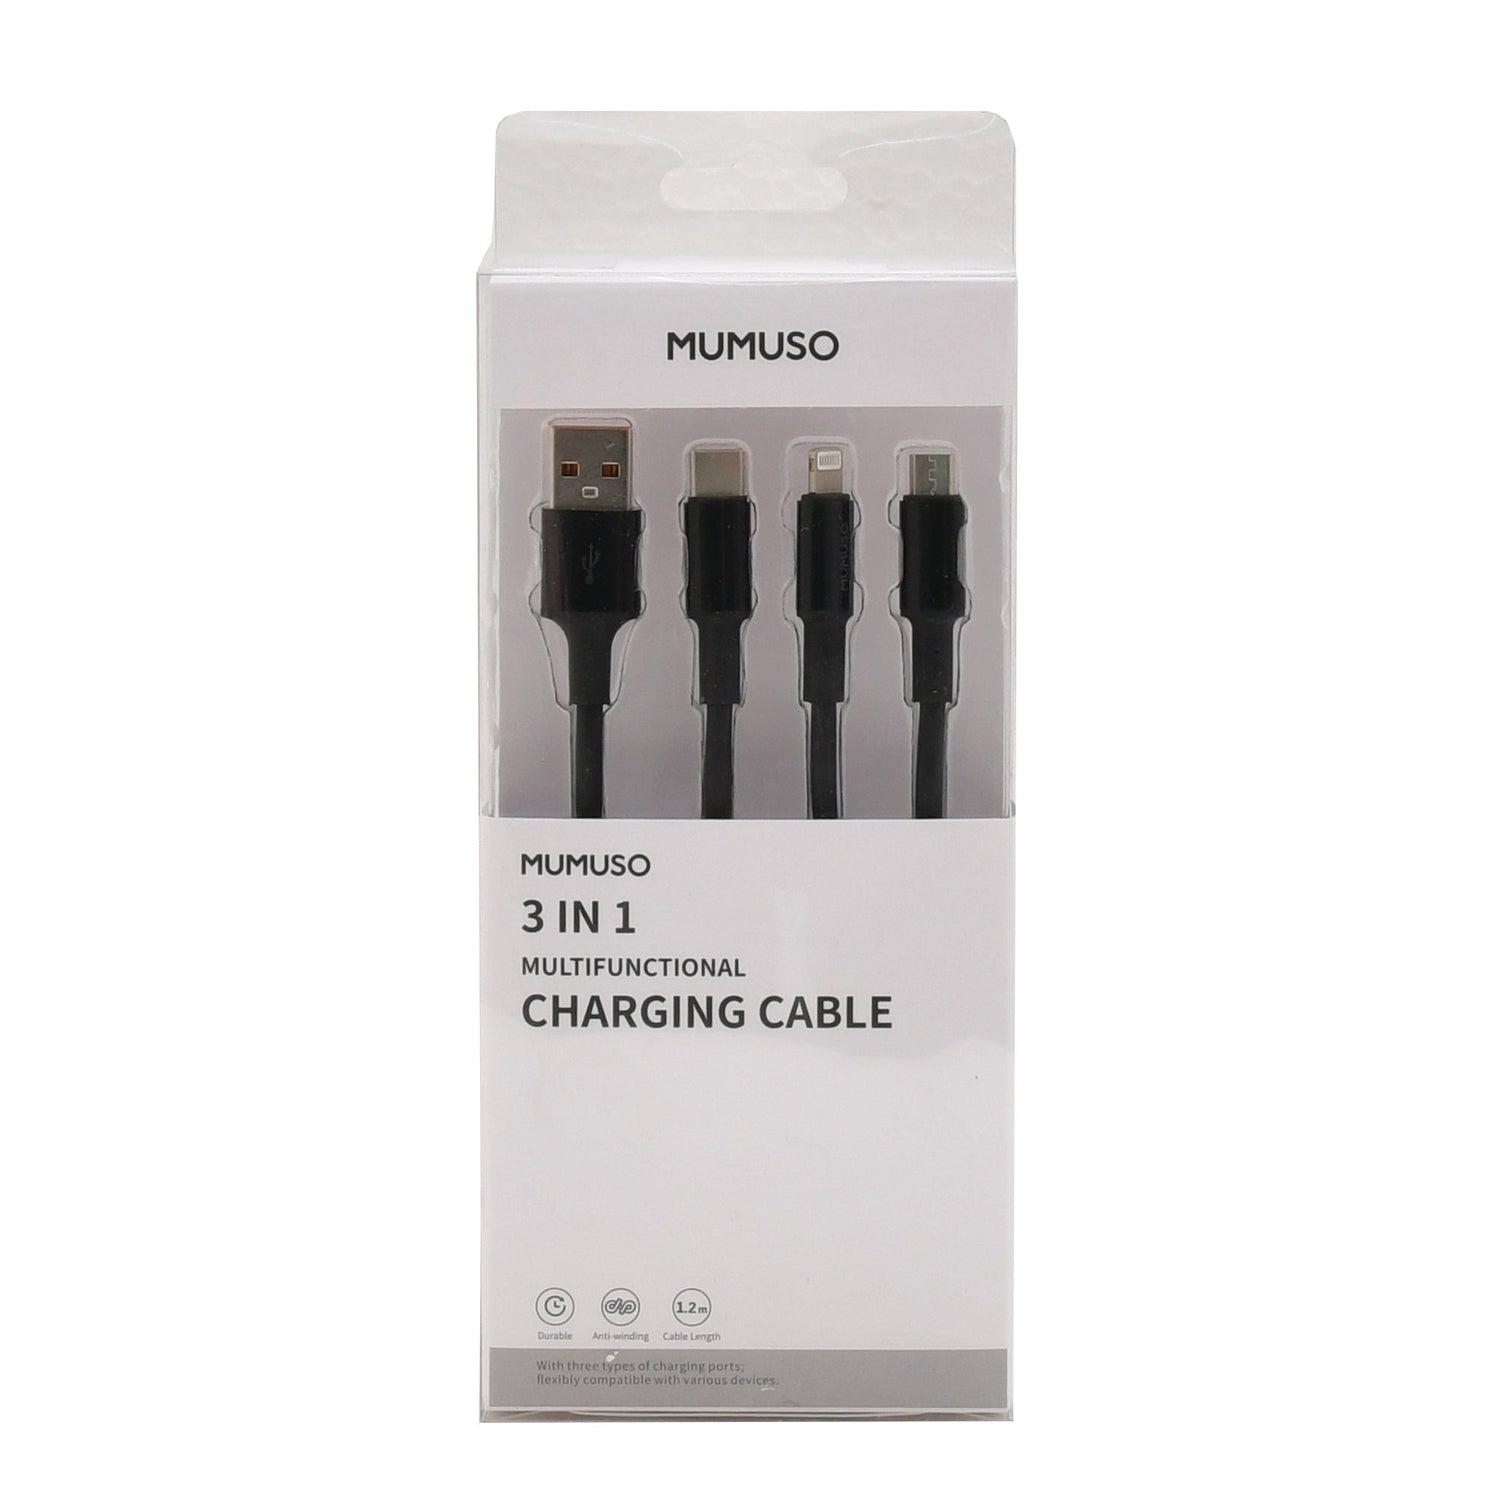 3-in-1 Multifunctional Charging Cable - Black Mumuso